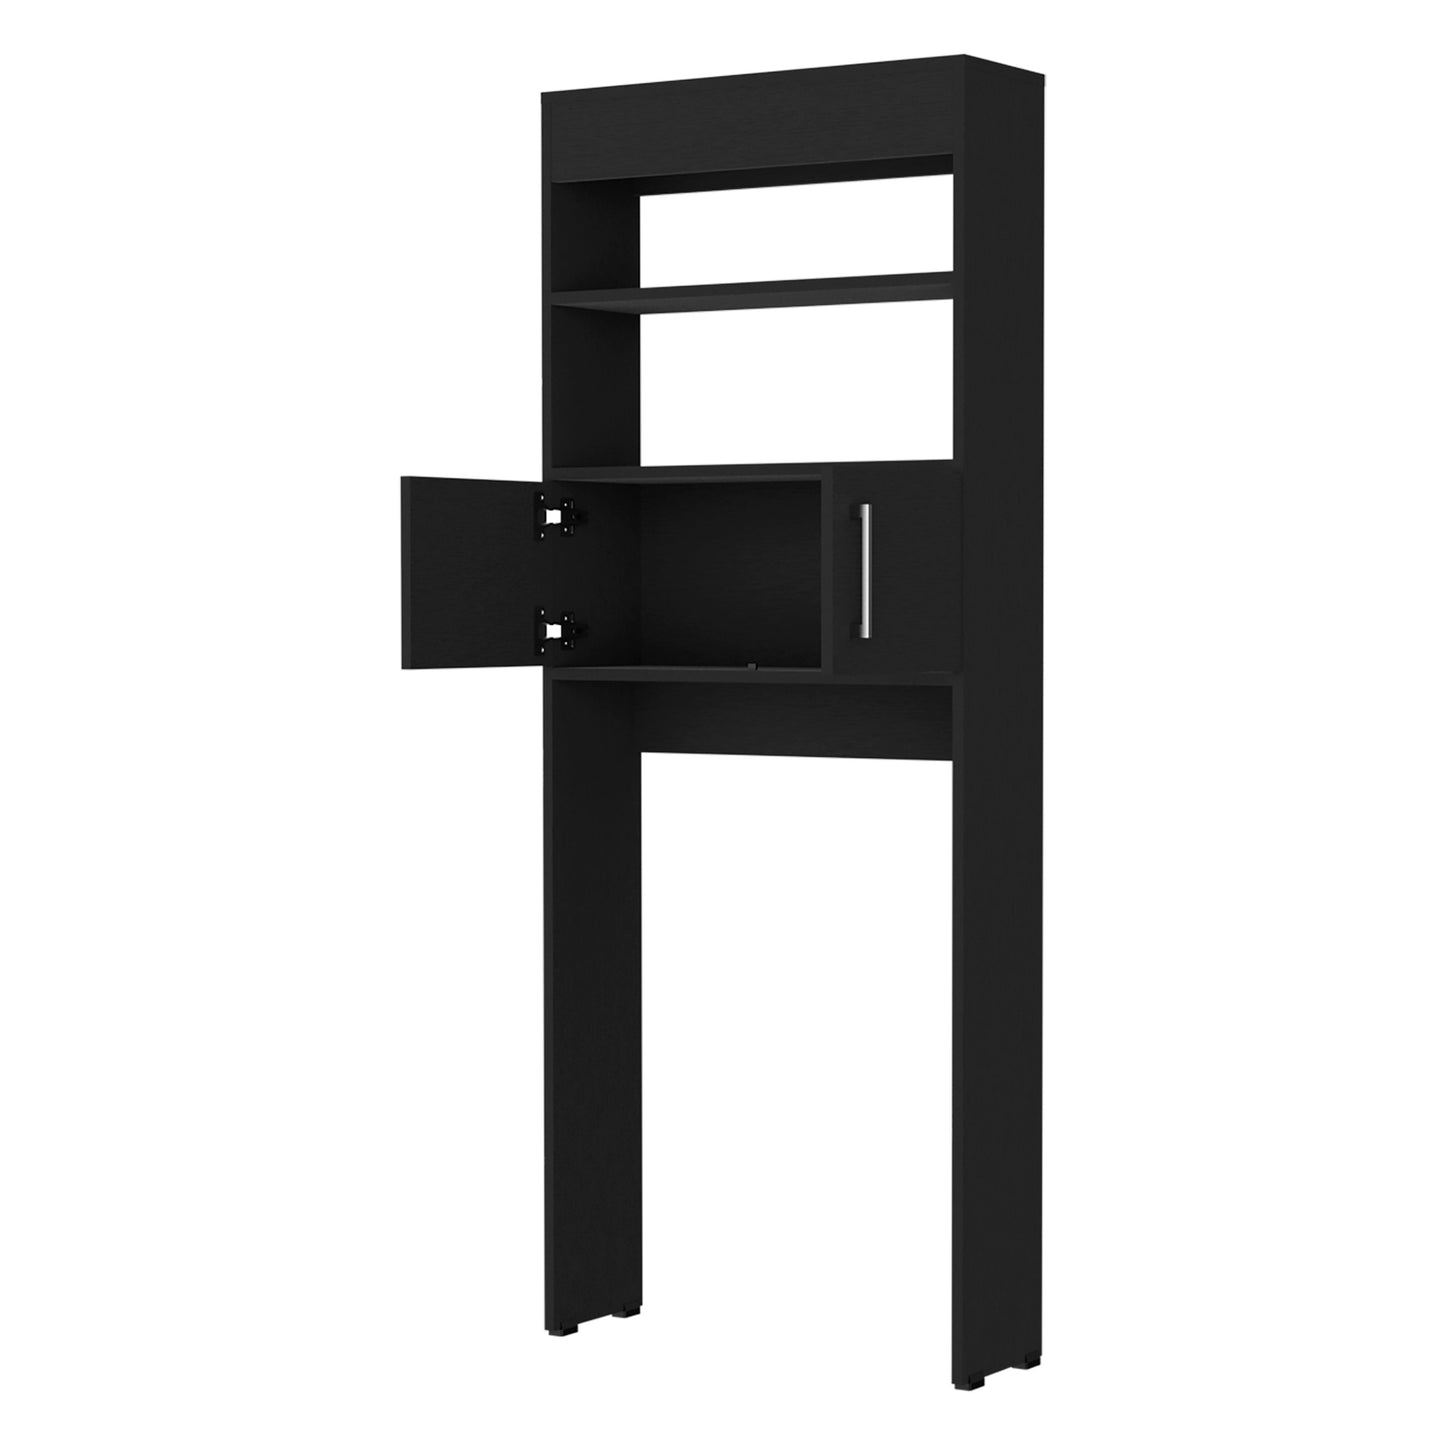 Morley 2-Shelf Toilet Cabinet - Black